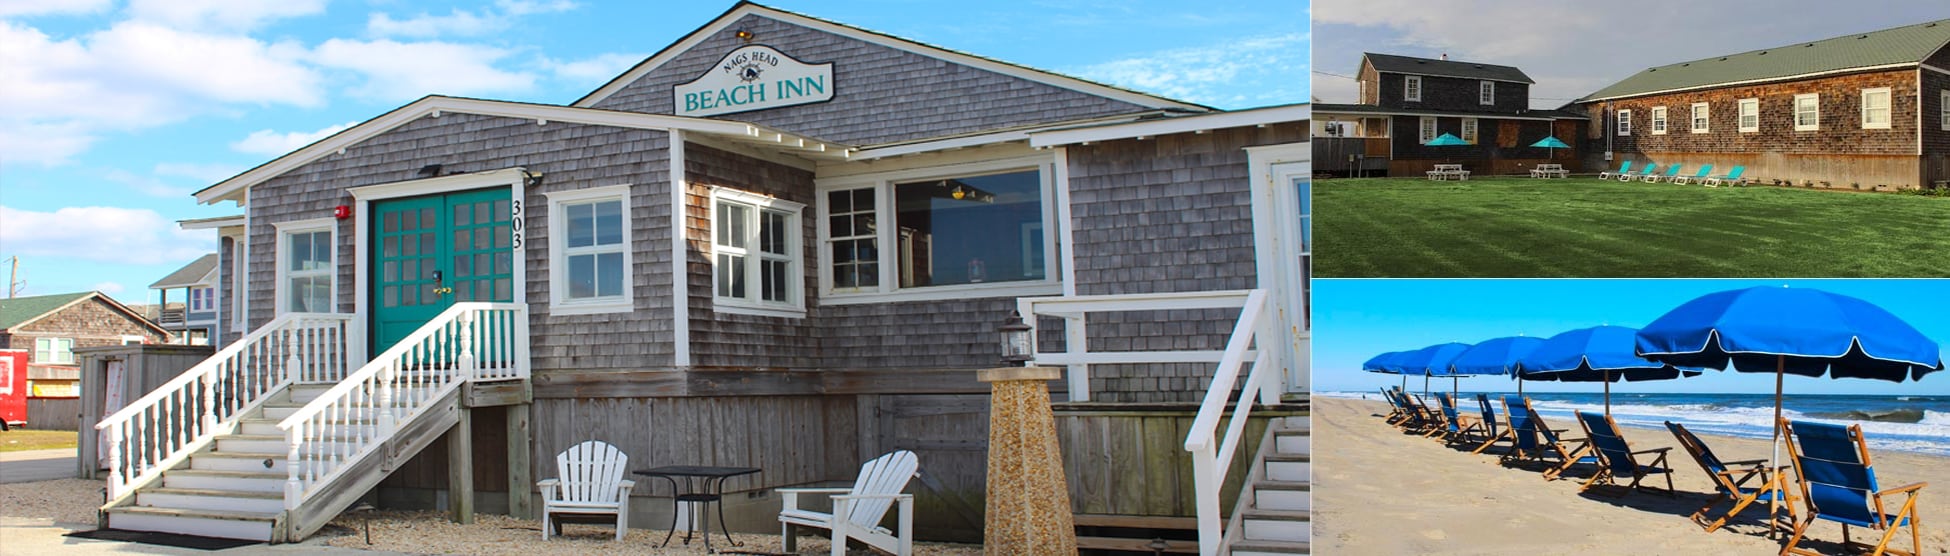 Nags Head Beach Inn Historic